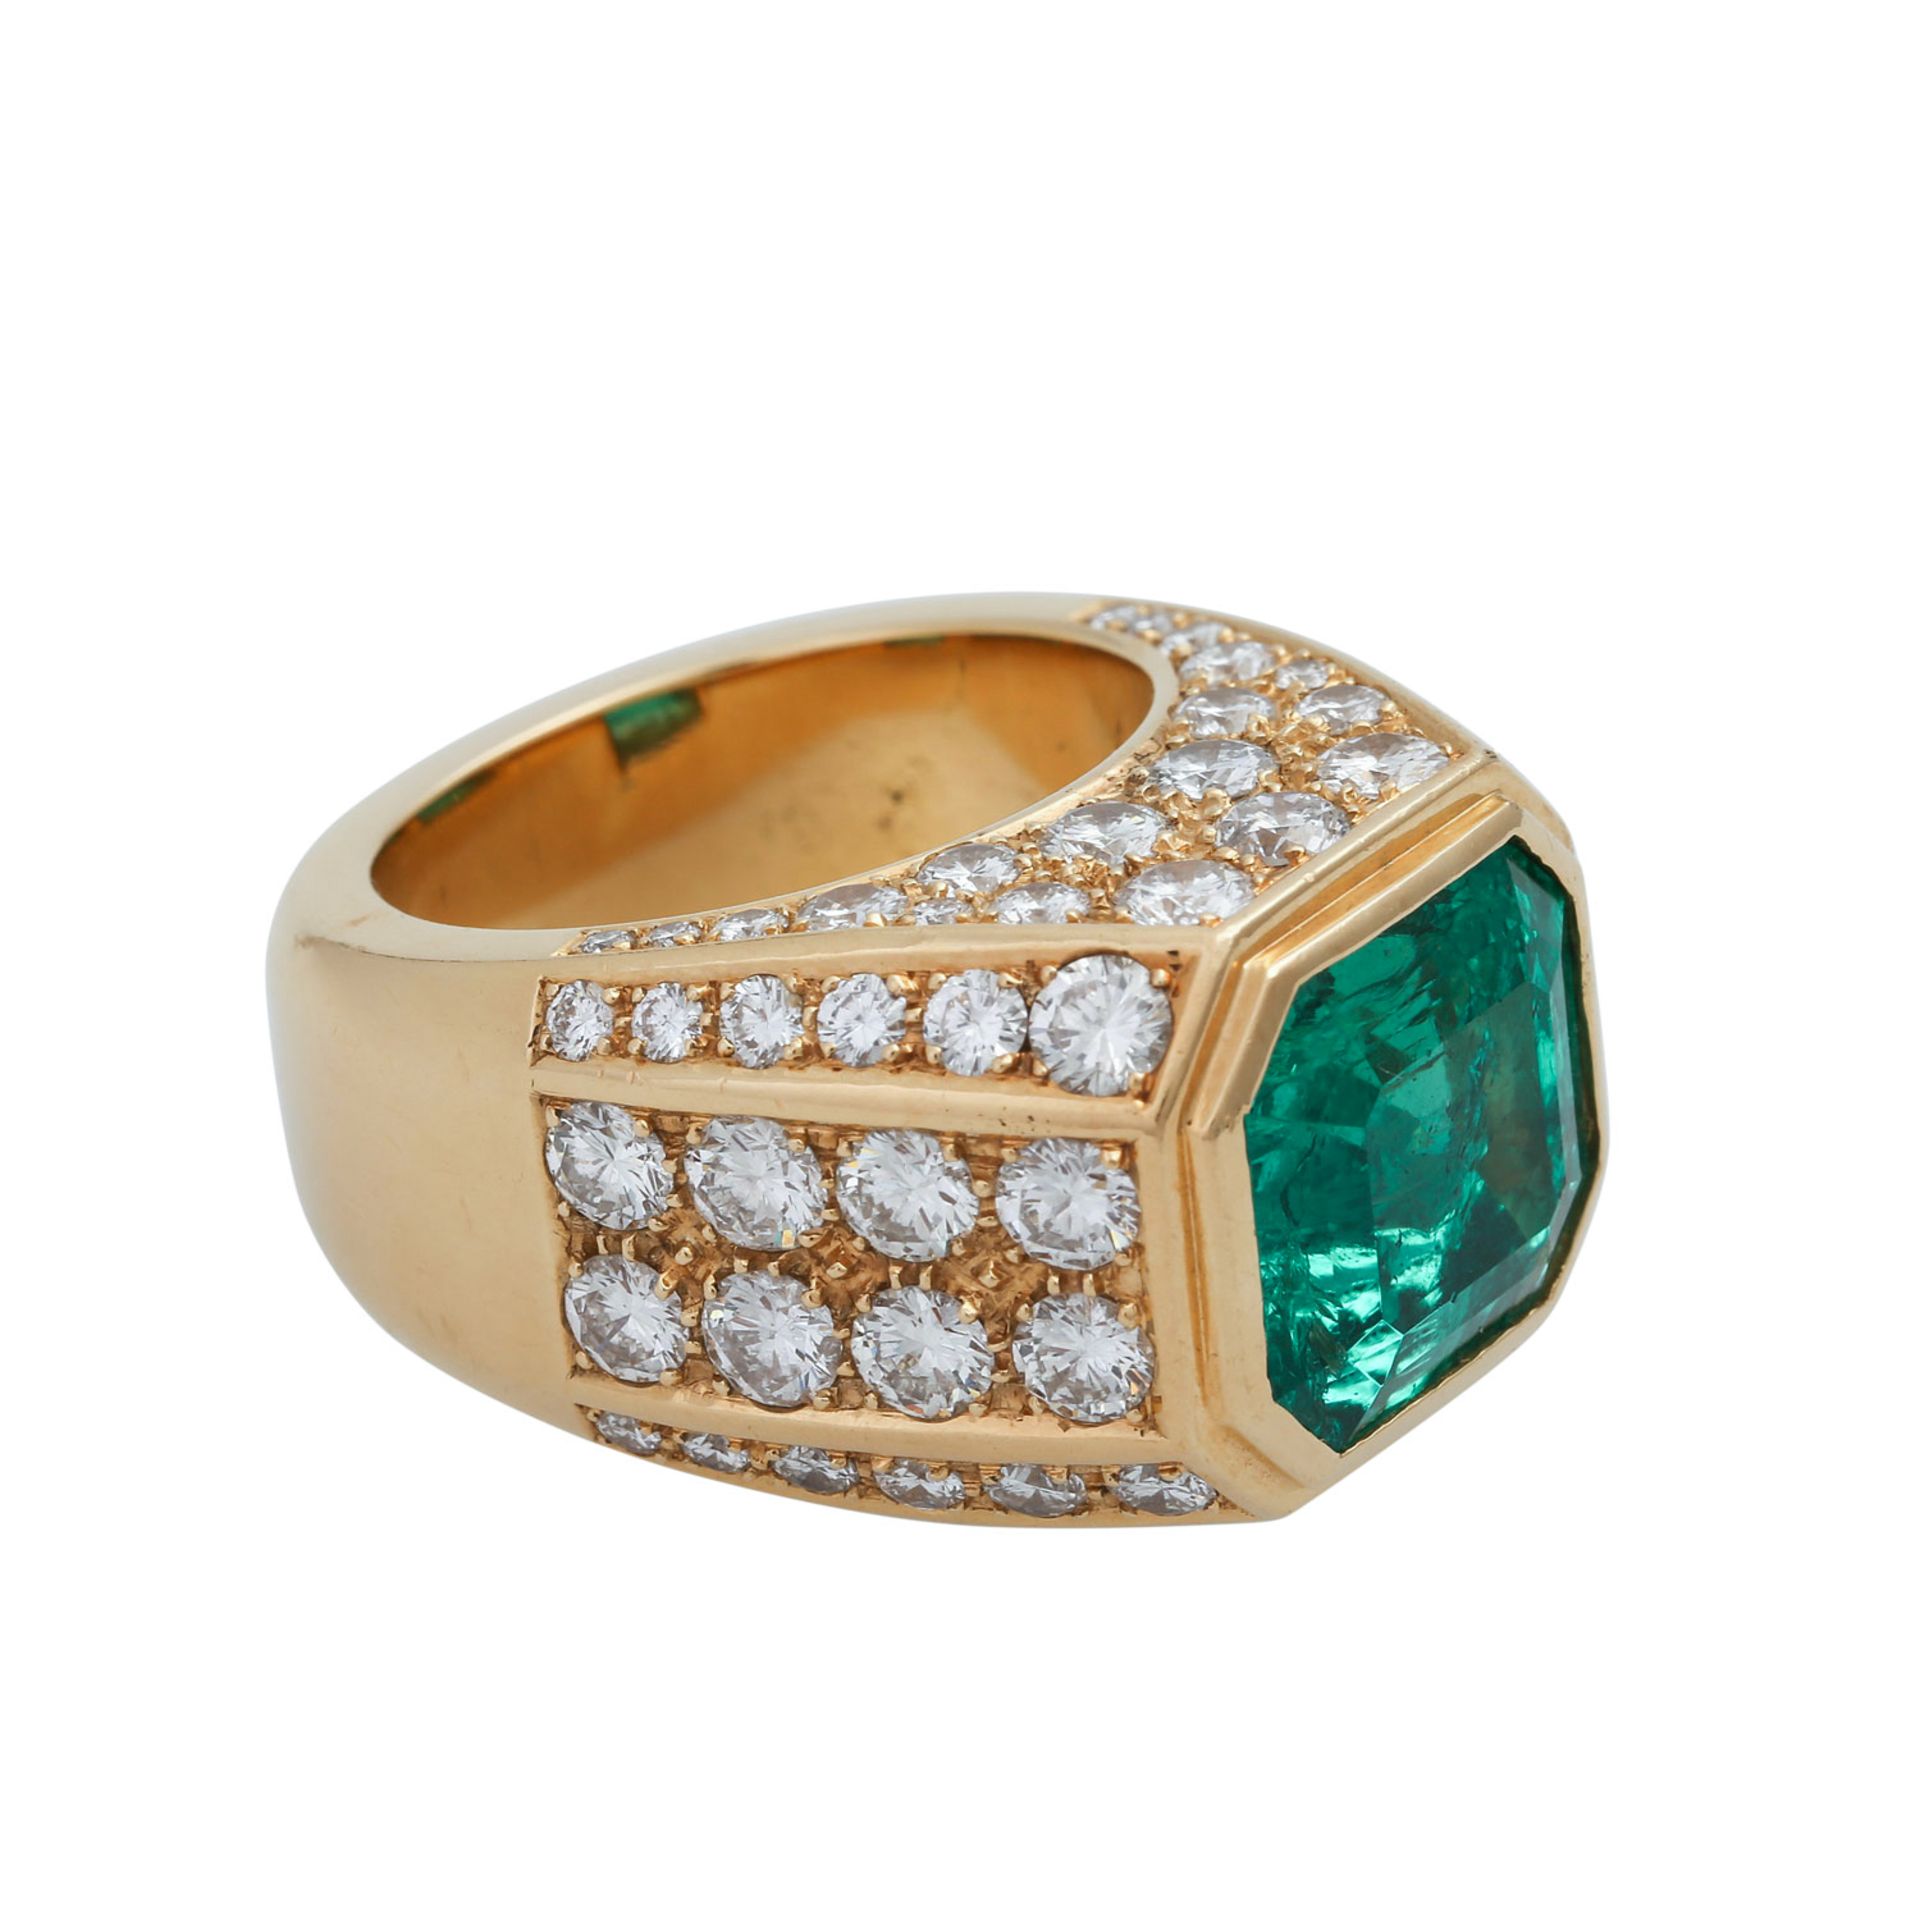 Ring mit Smaragd ca. 12 ct und Brillantenzus. ca. 5 ct WEIß-LGW (H-J)/VS-SI2, GG 18K. RW: ca. 56. - Image 2 of 6